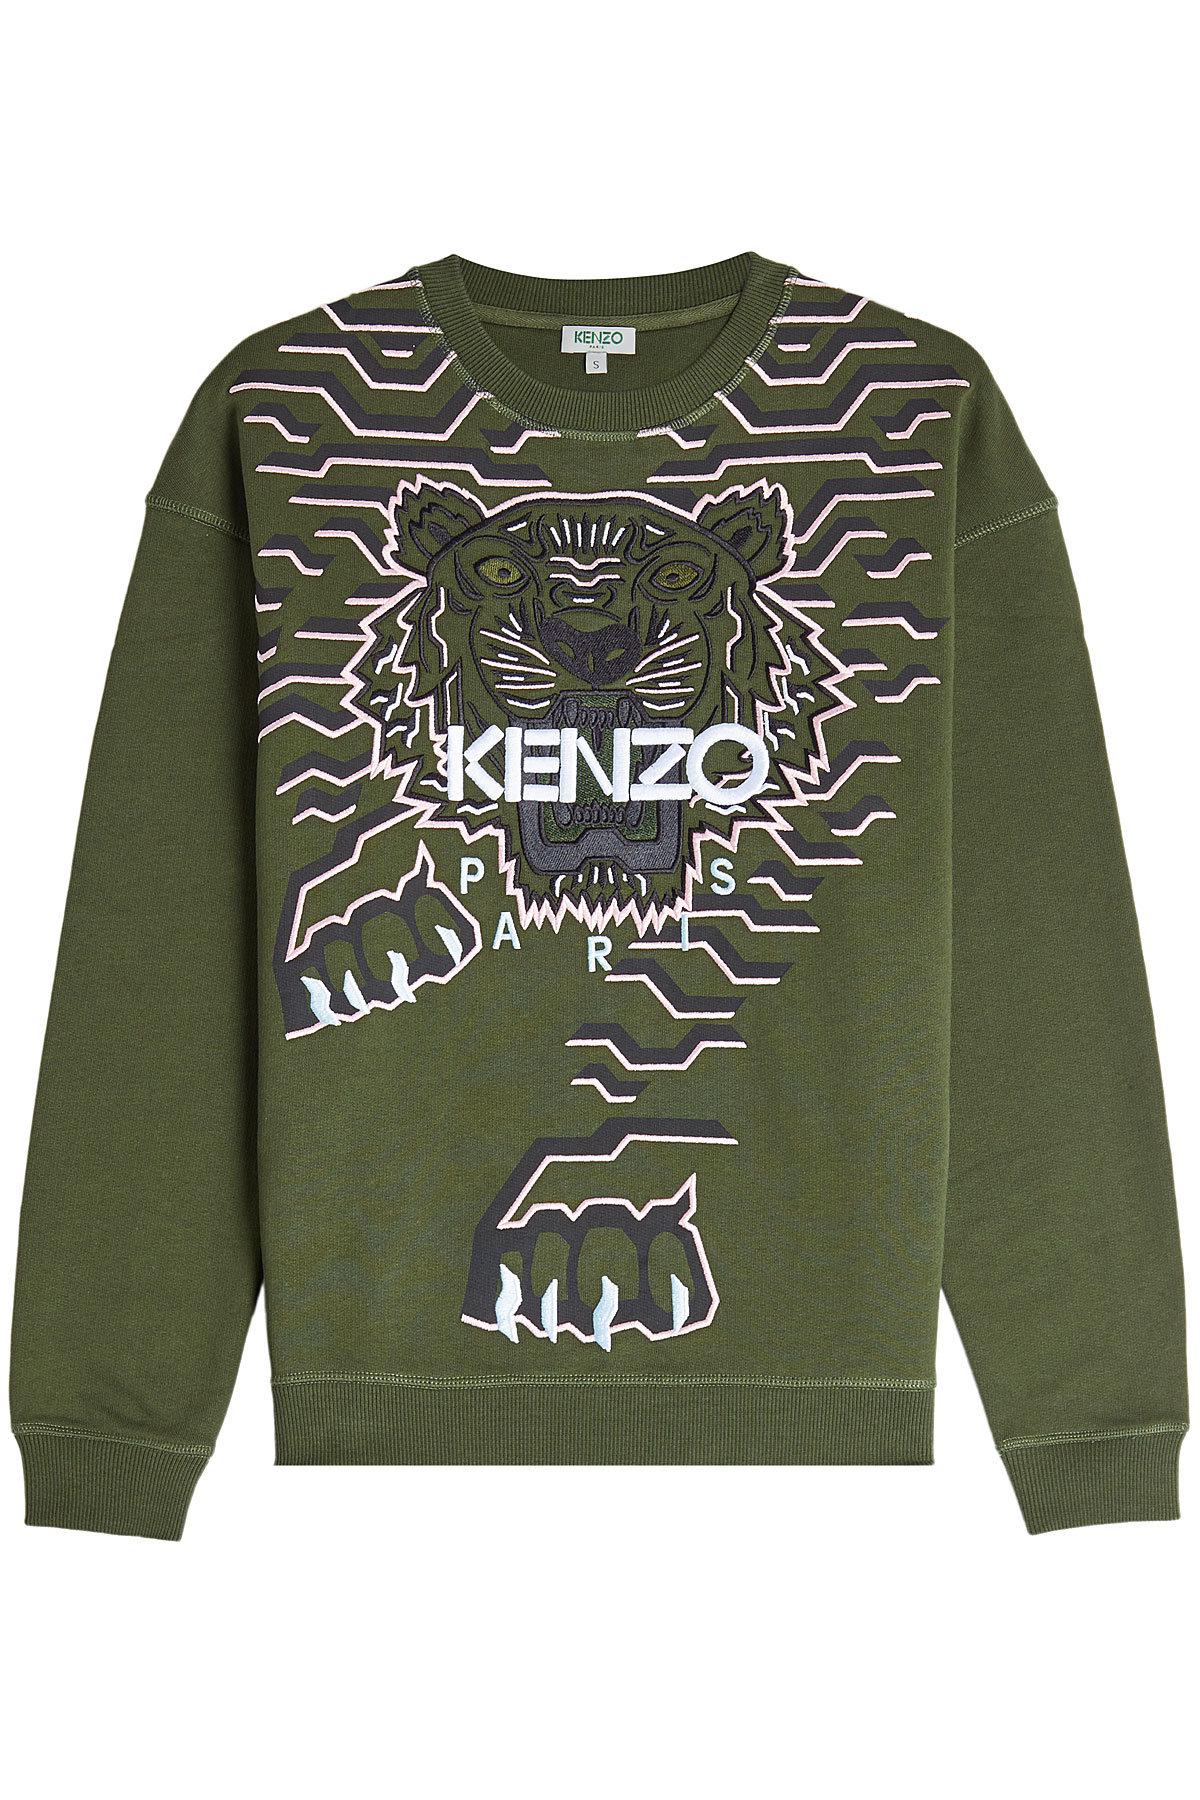 Lyst - Kenzo Embroidered Cotton Sweatshirt